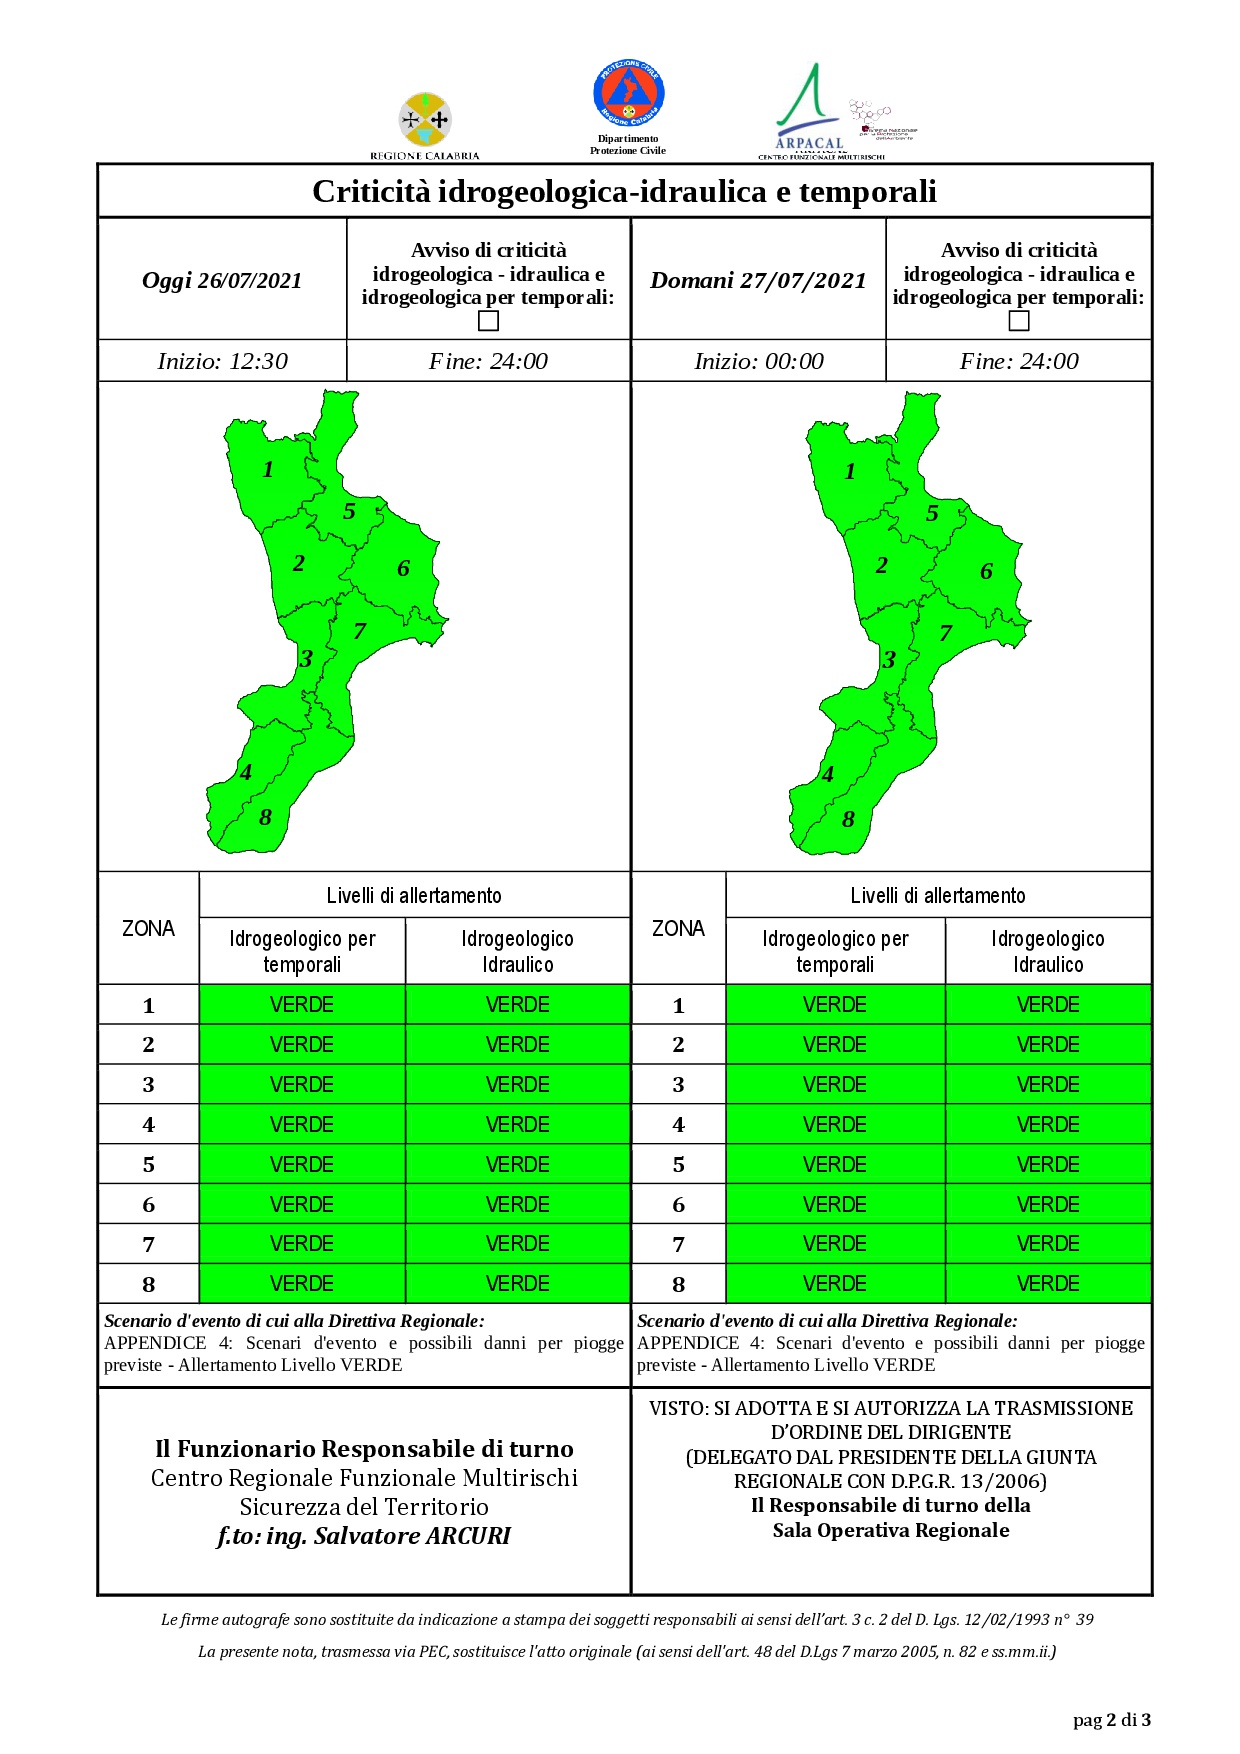 Criticità idrogeologica-idraulica e temporali in Calabria 26-07-2021